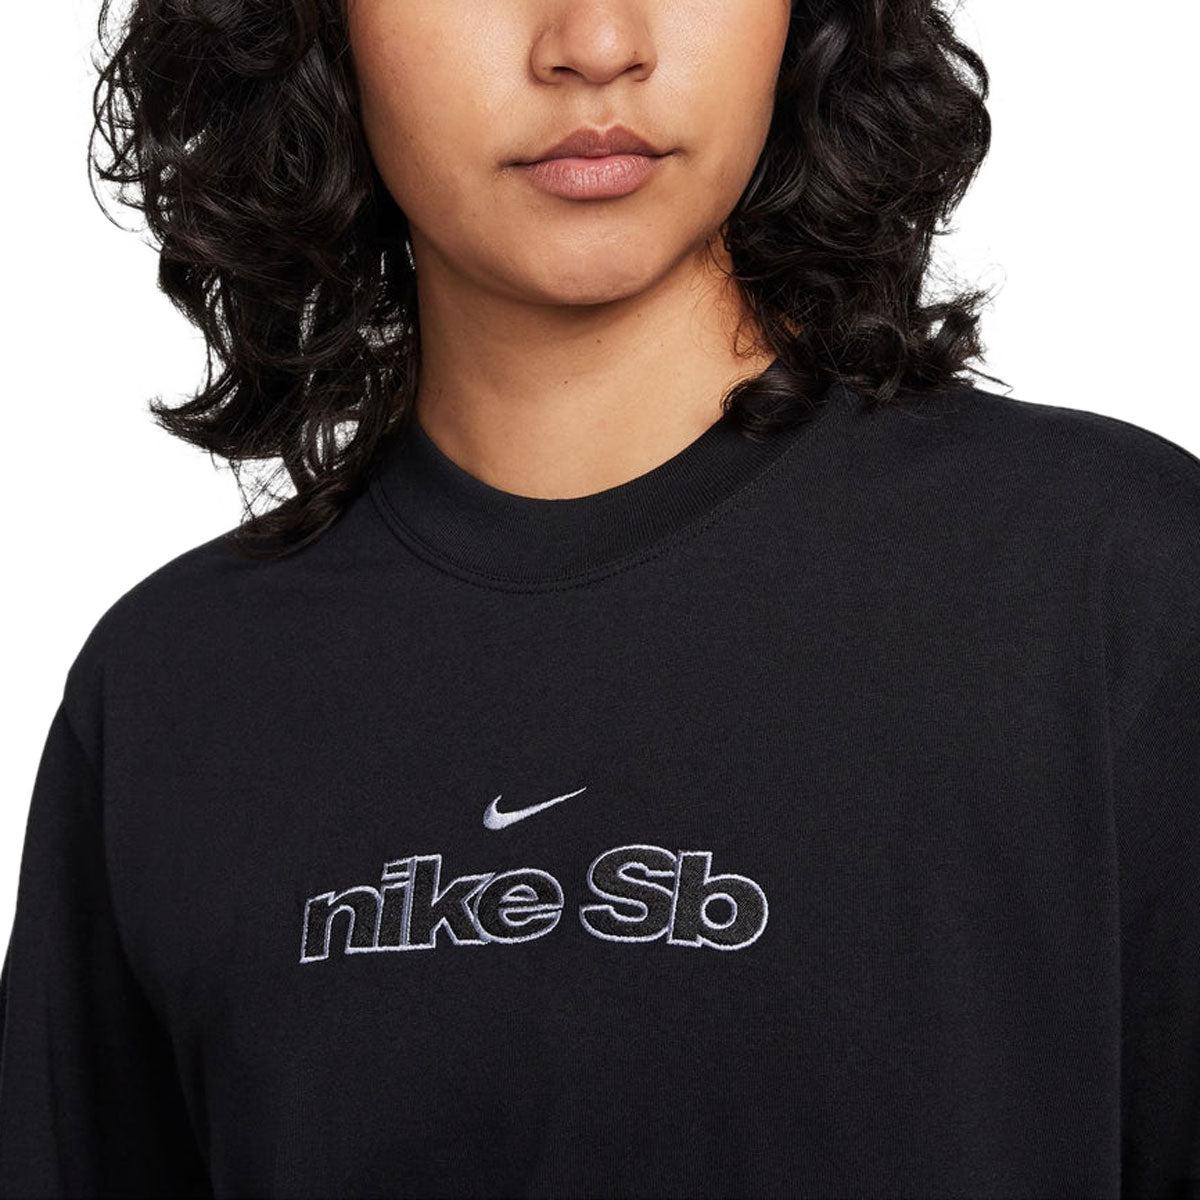 Nike SB Skate Outline T-Shirt - Black image 3